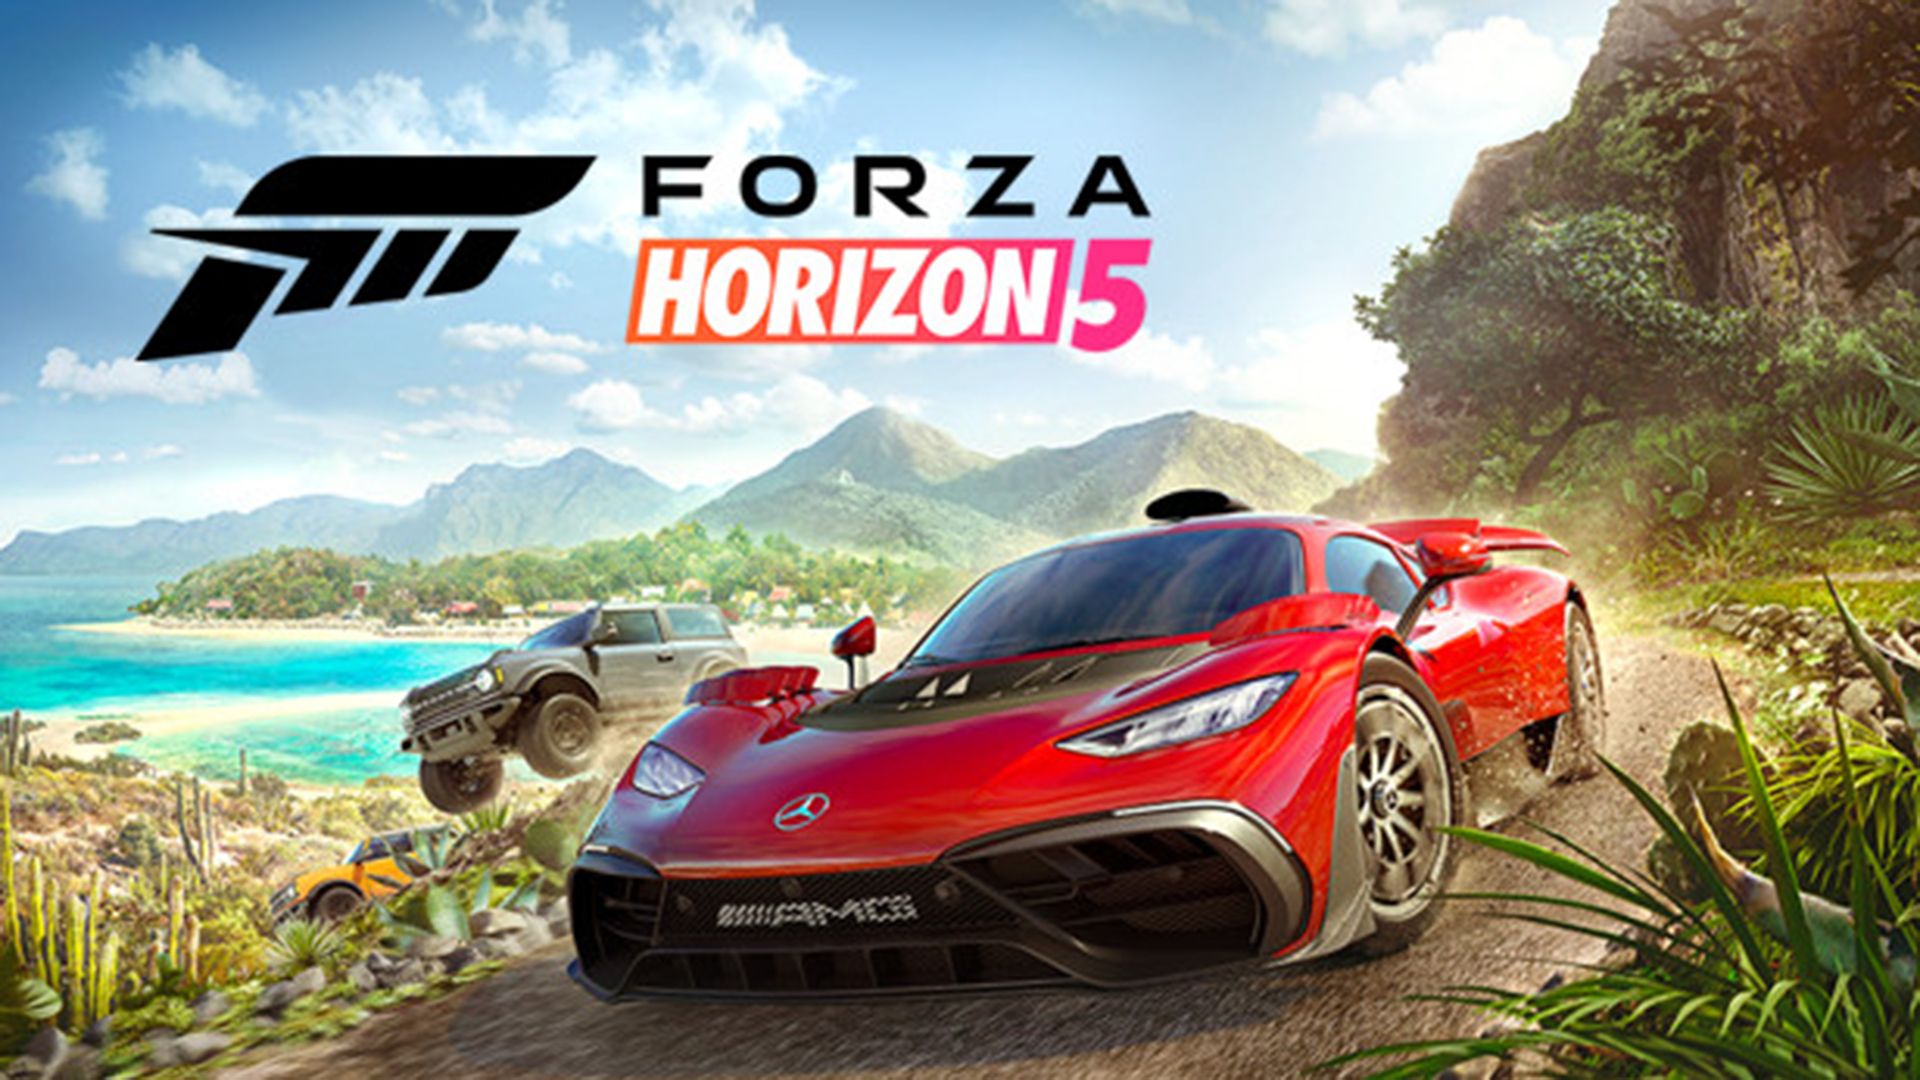 Forza Horizon 5 will generously reward series’ veterans with free cars